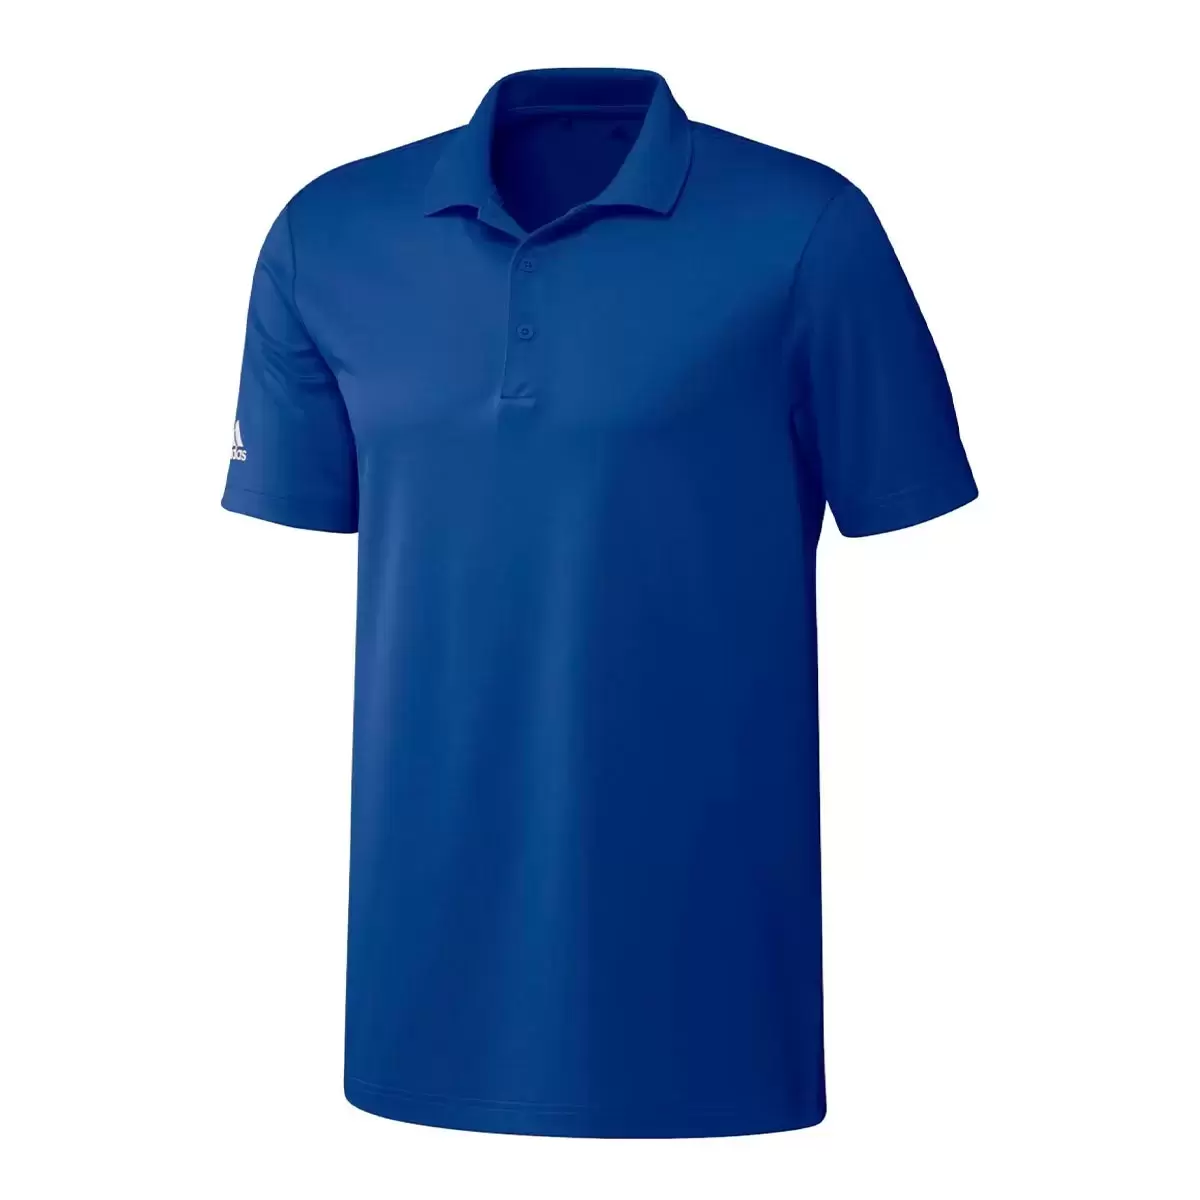 Adidas Golf 男短袖Polo衫